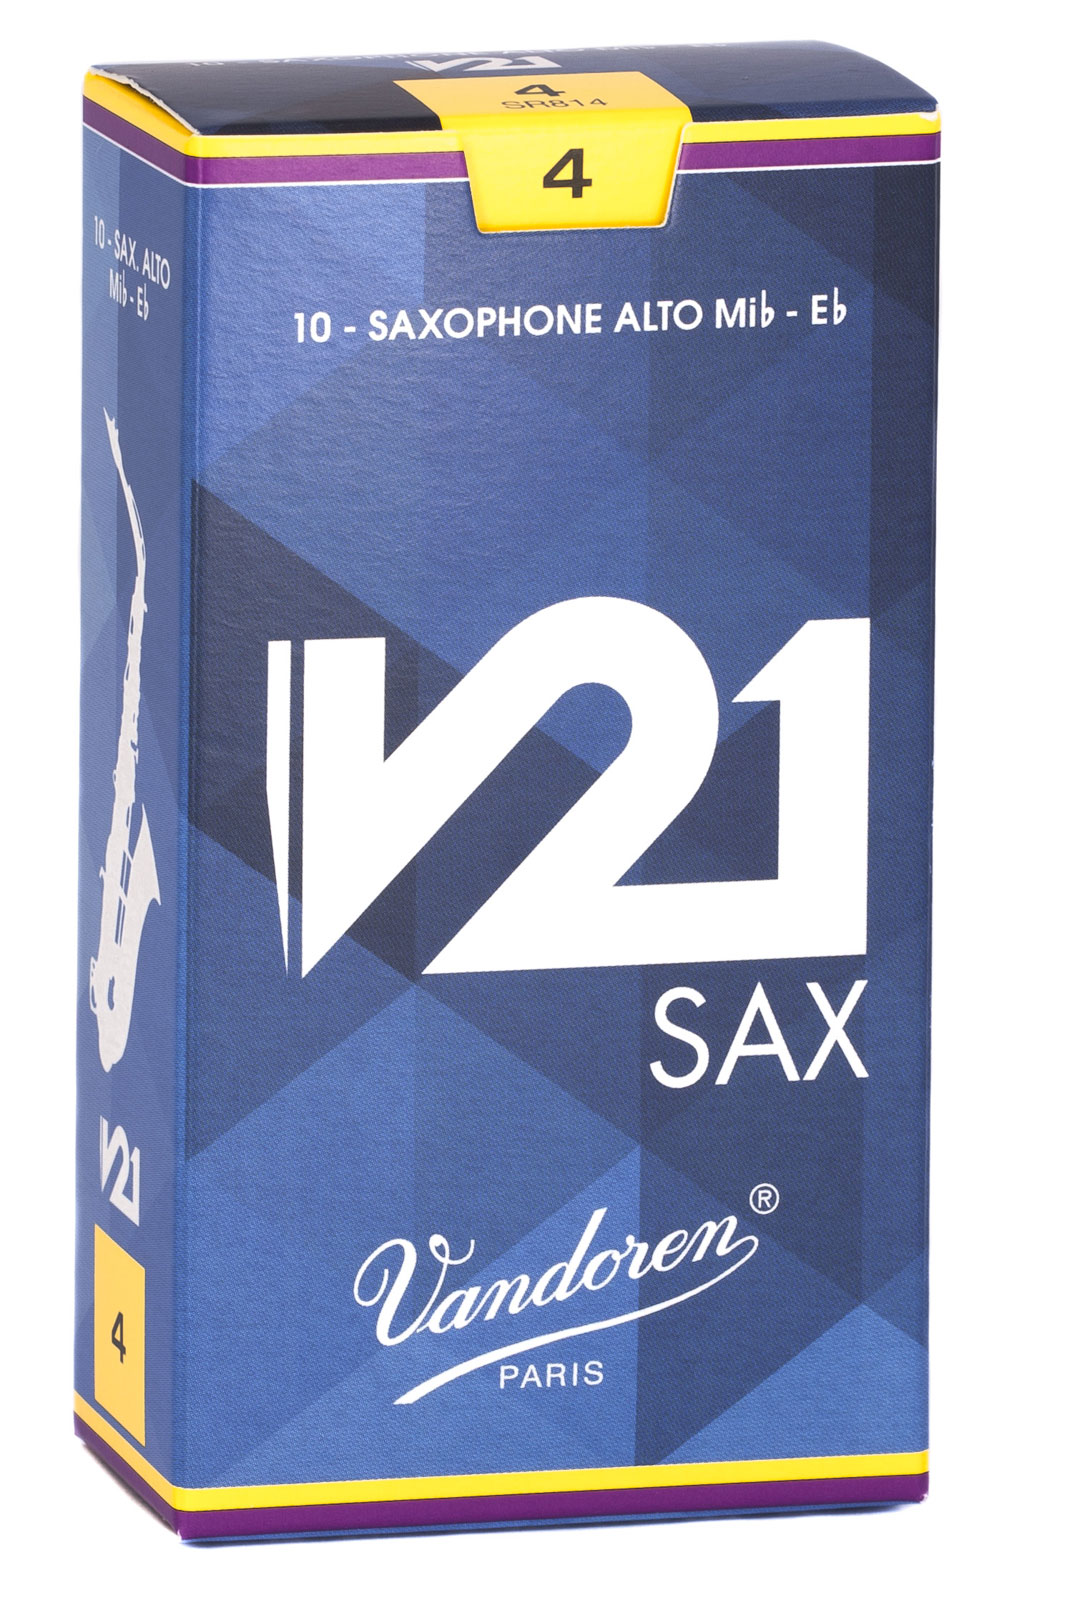 VANDOREN ALTO SAXOPHONE REEDS V21 4